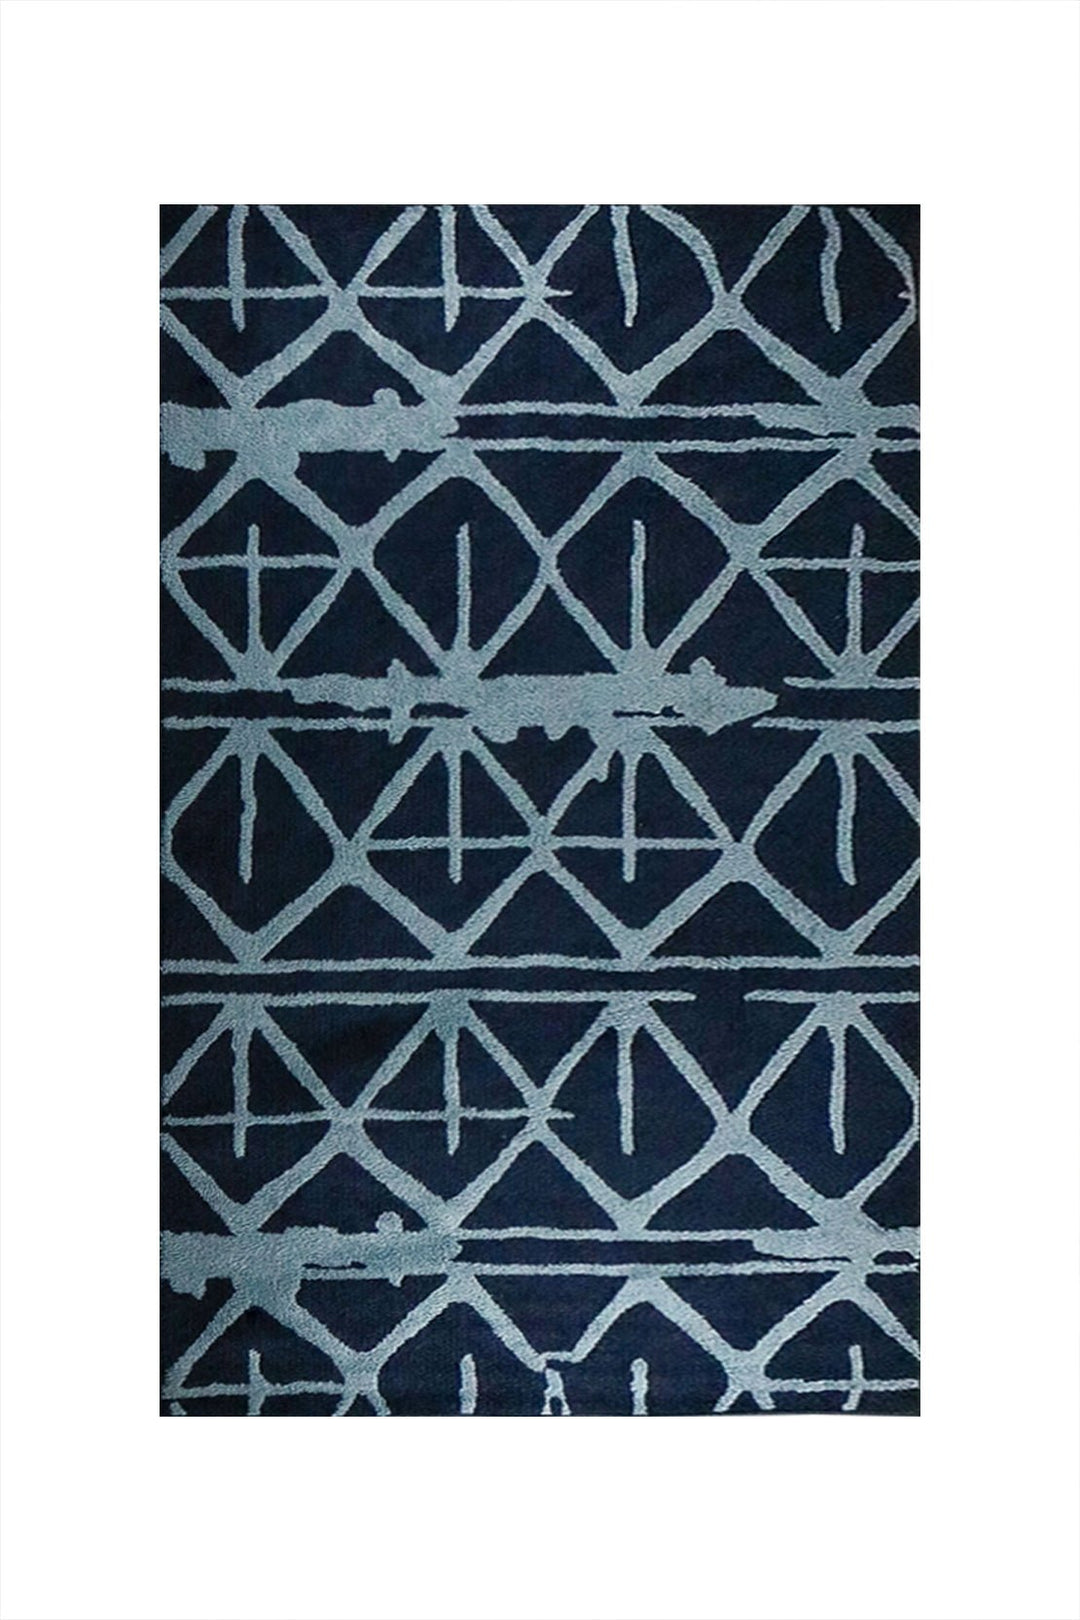 Turkish Plush and Soft Festival WD Shaggy Rug -5.3 x 7.5 FT - Blue - Fluffy Furry Floor Decor Shaggy Rug - V Surfaces